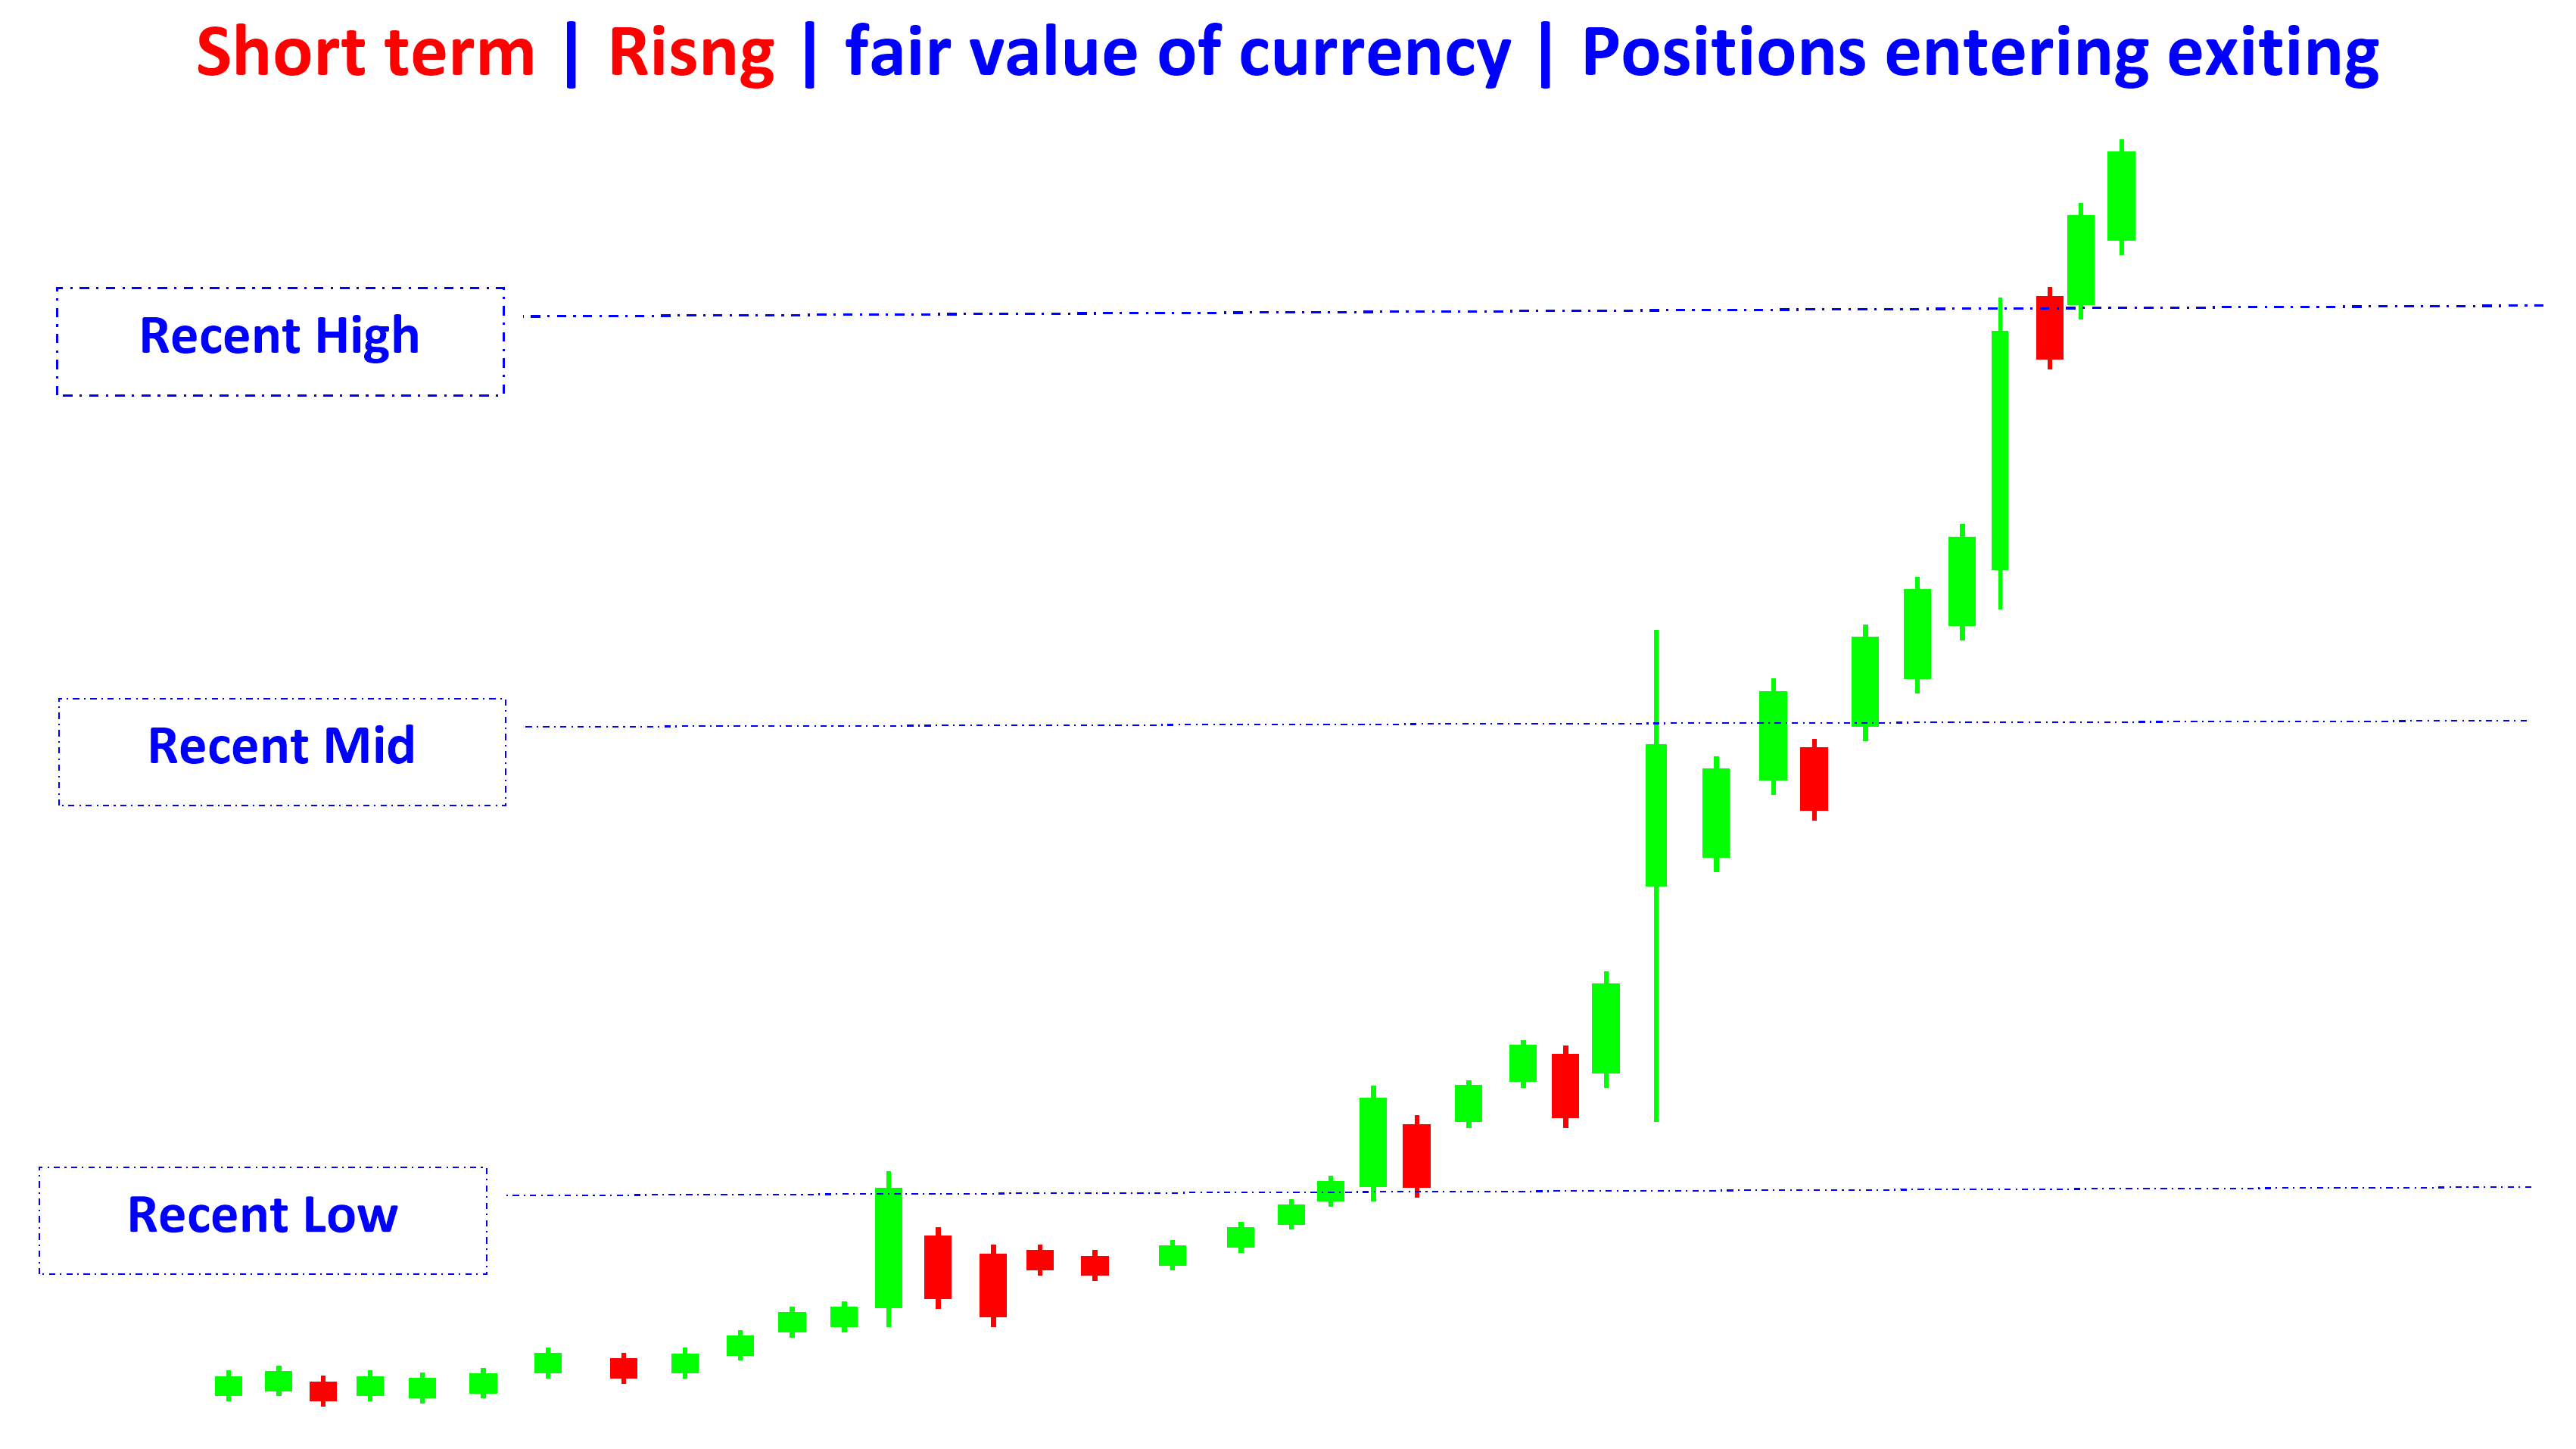 fair value indicators of currency in short terms rising en